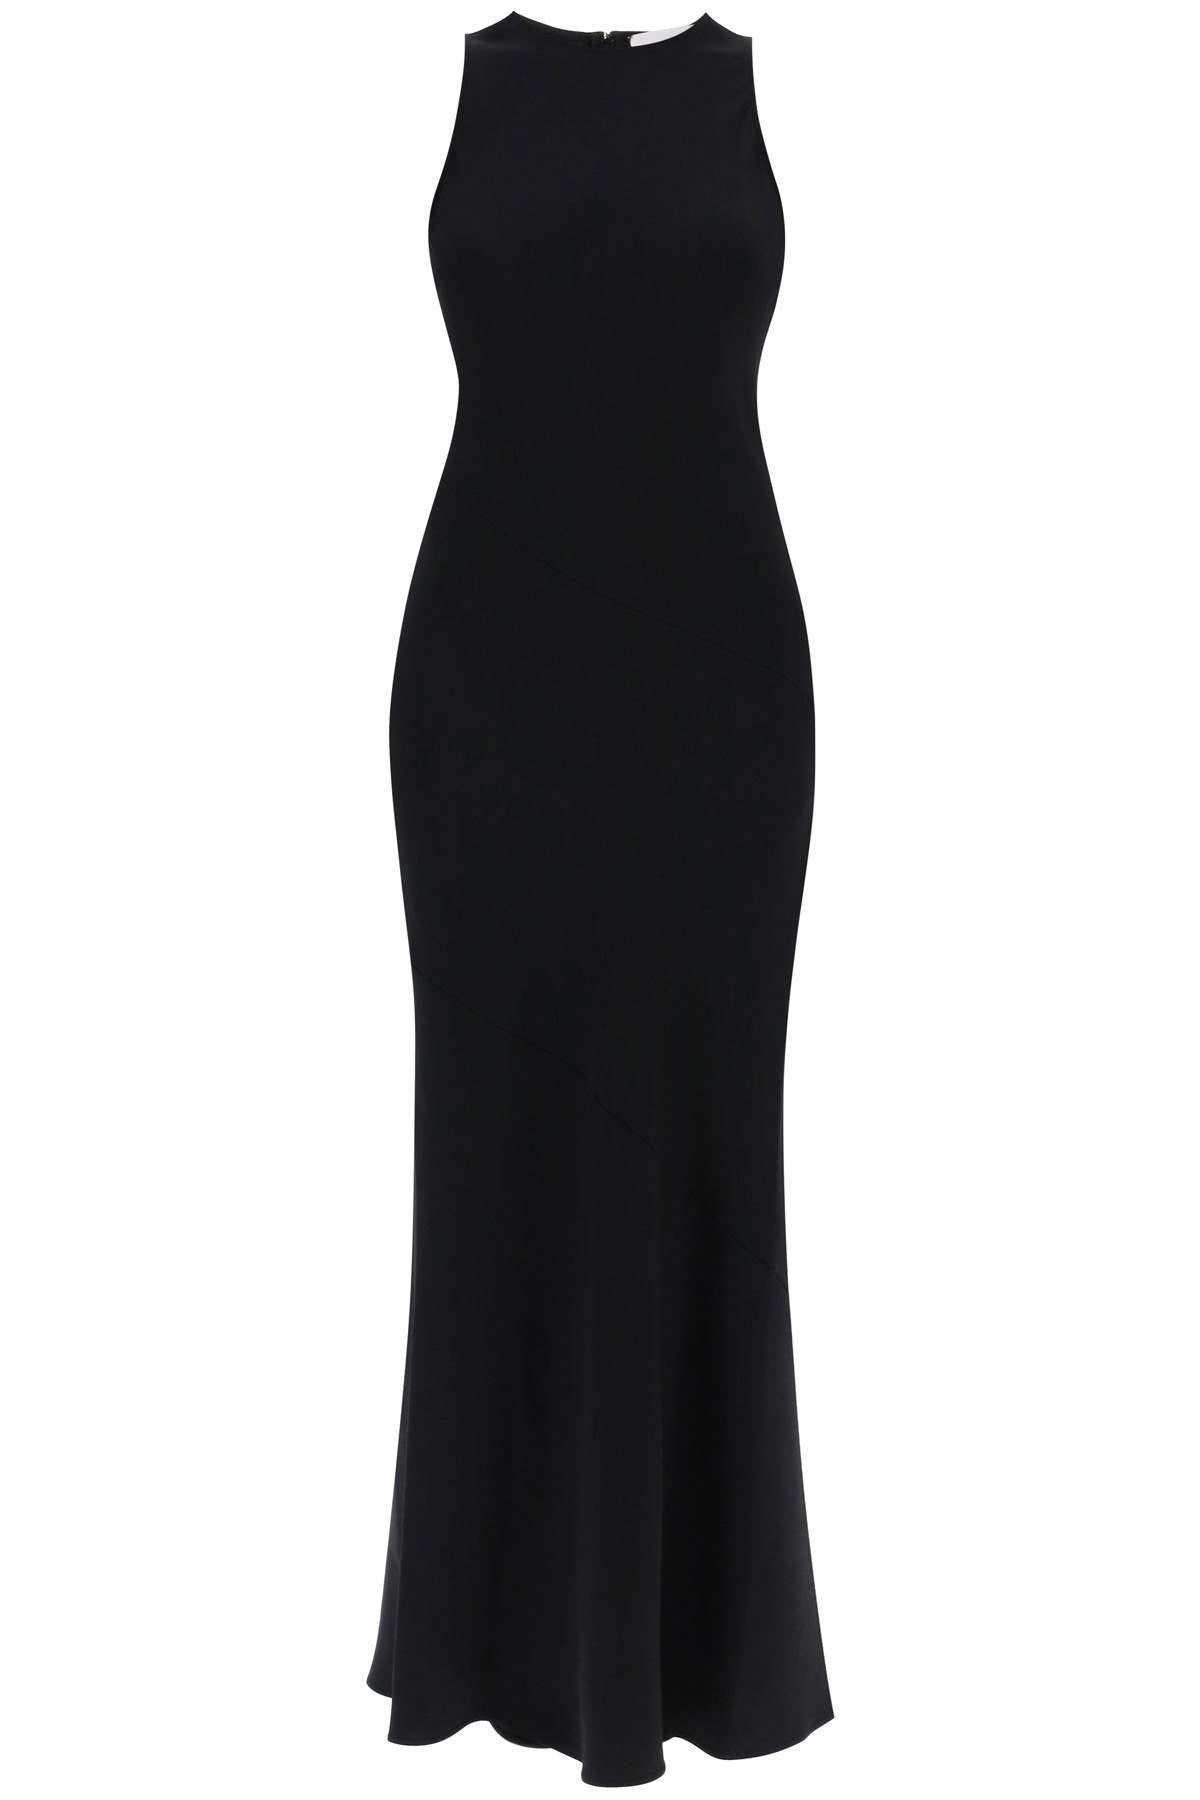 AMI PARIS Elegant Black Maxi Dress with Biased Cuts for Women